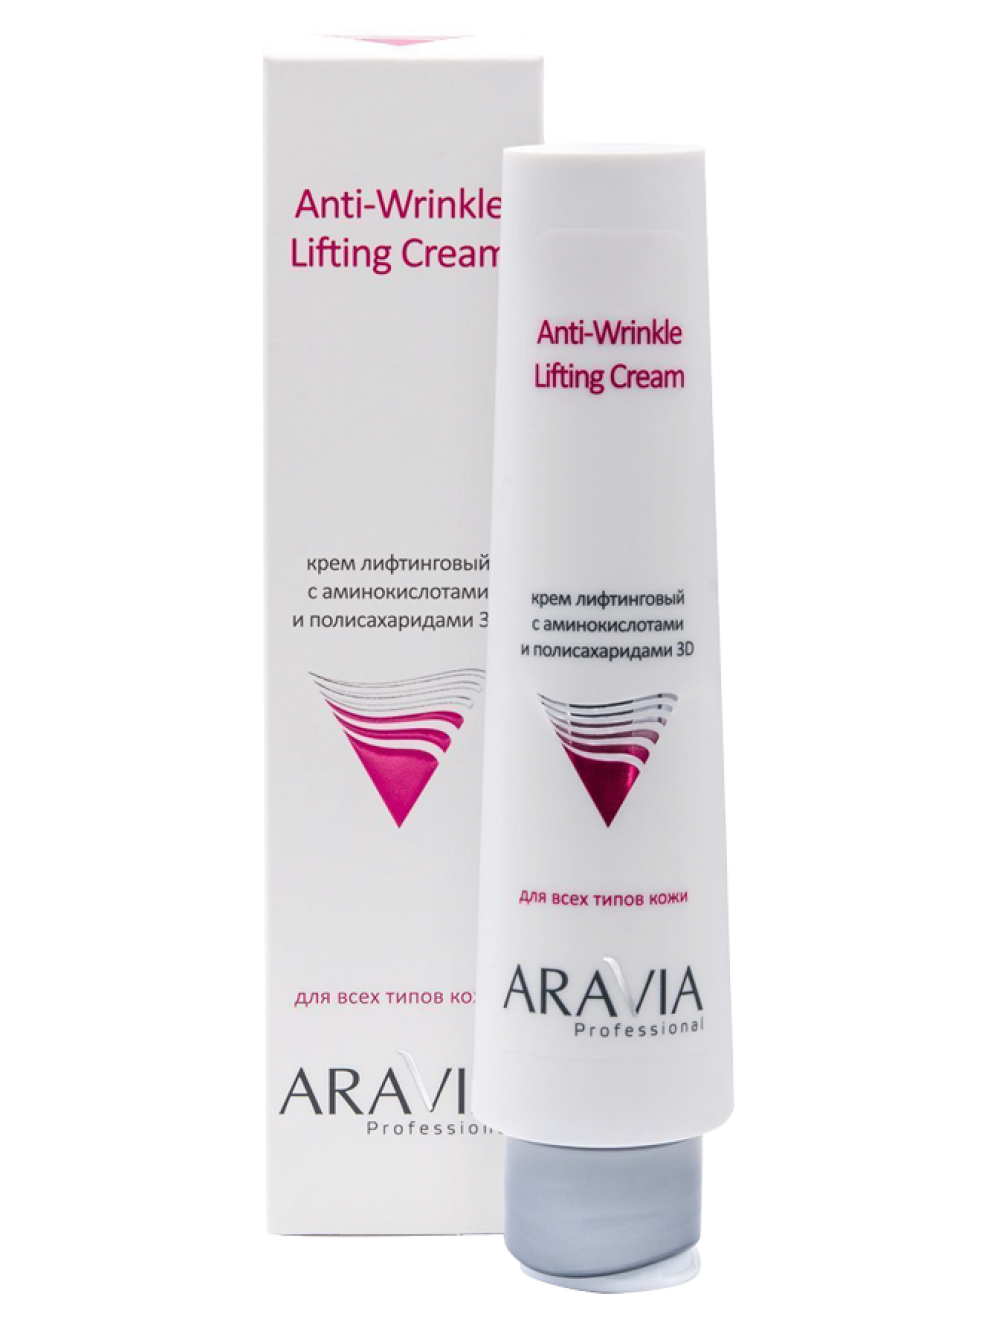 anti wrinkle lifting cream)